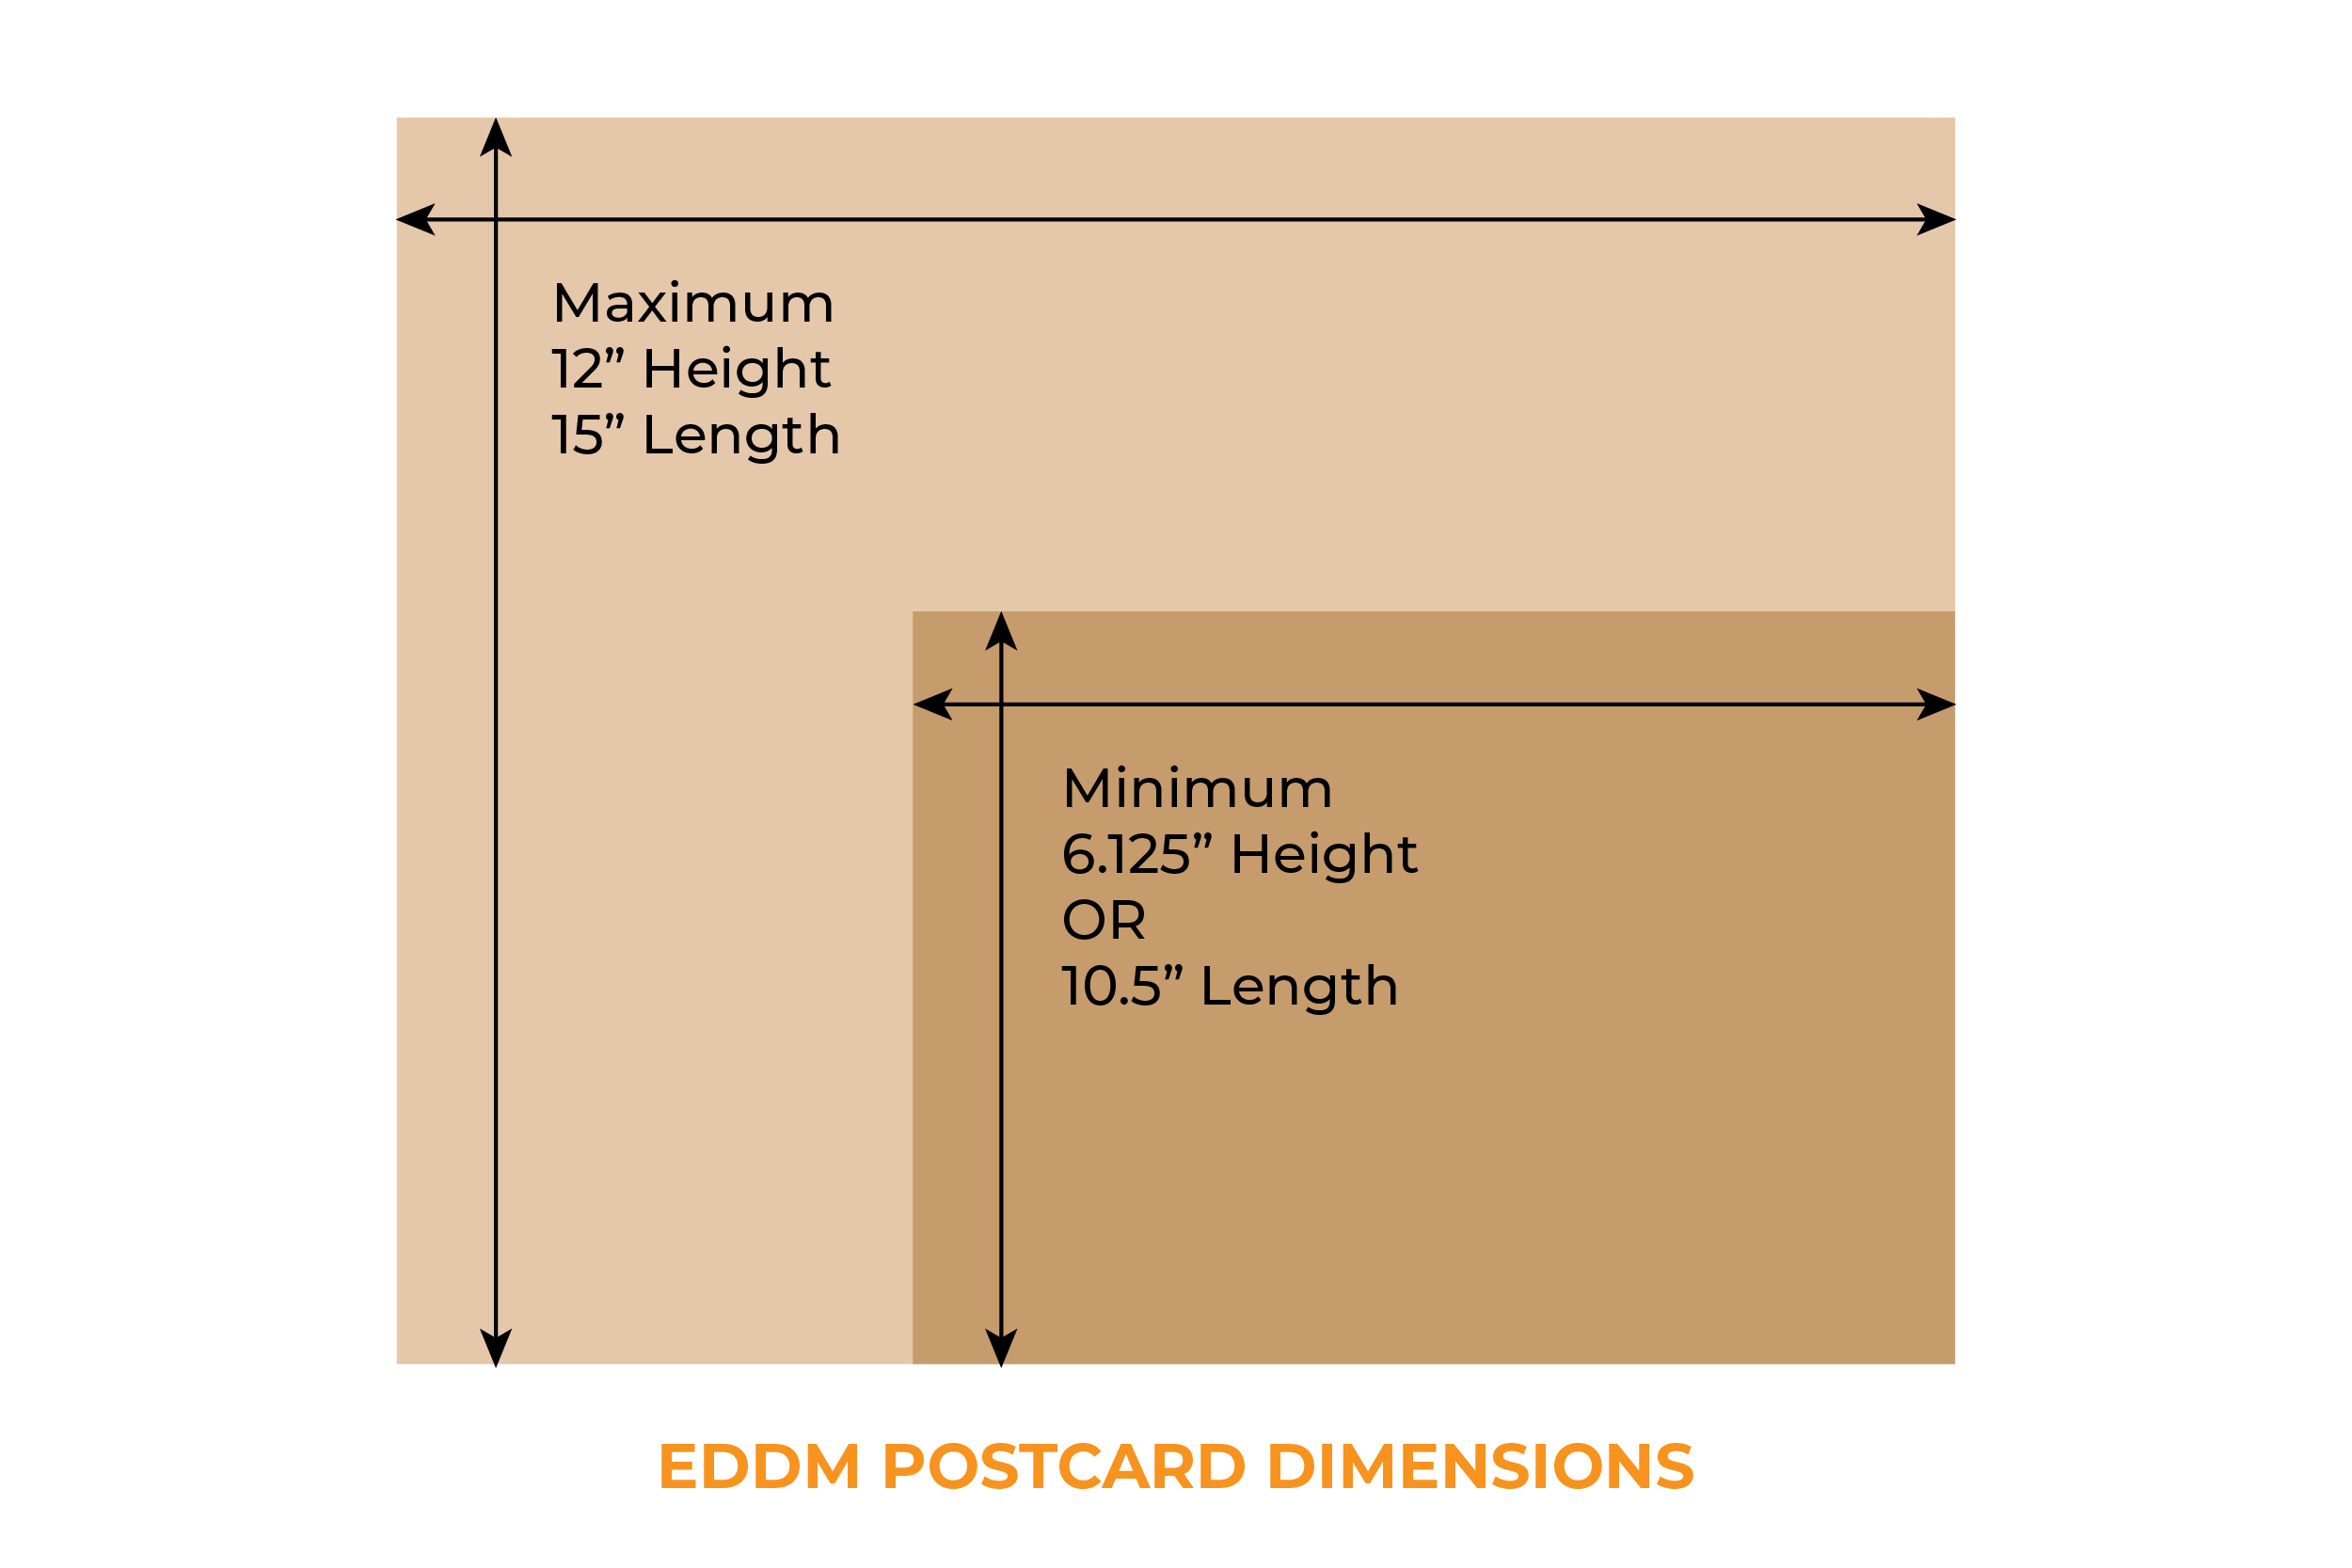 EDDM Postcard Sizes Guide